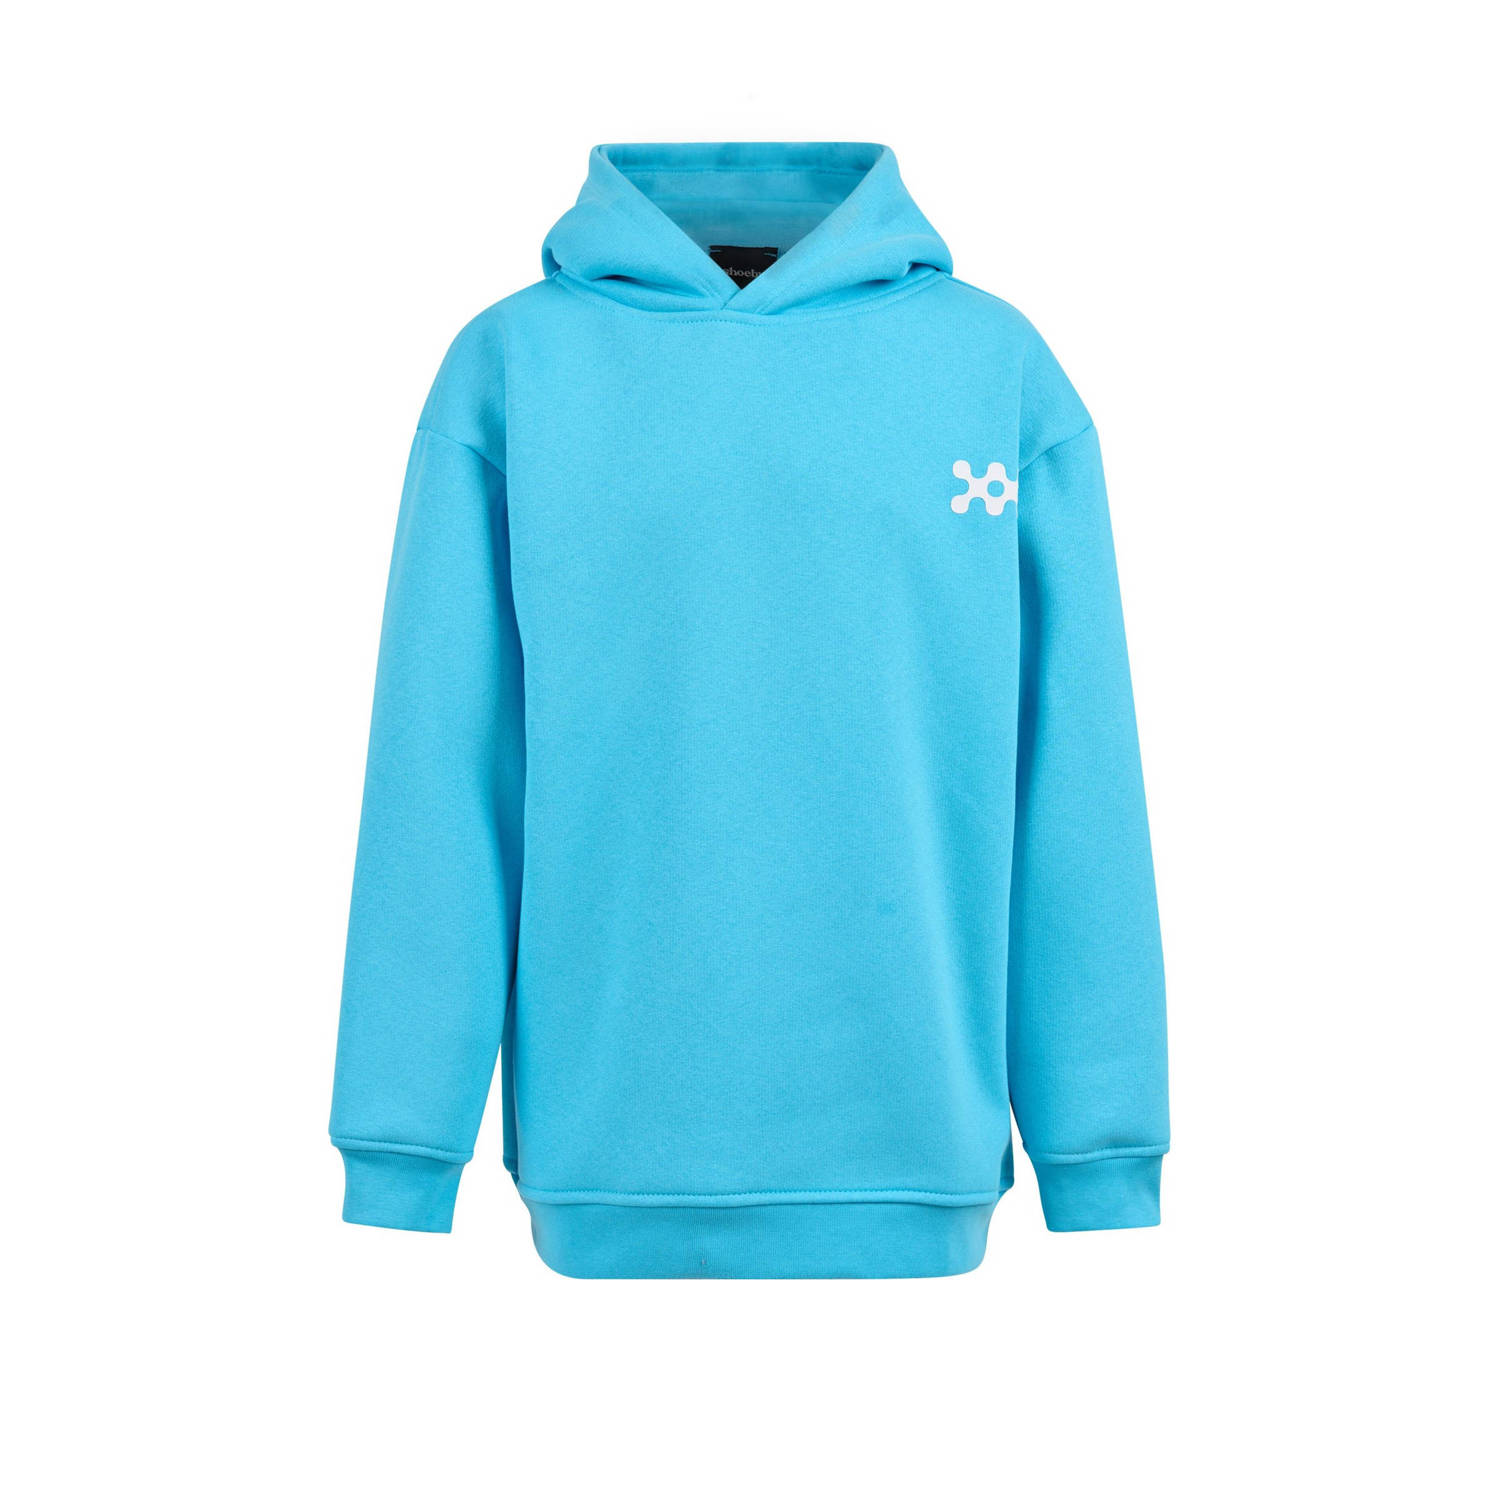 Shoeby hoodie turquoise Sweater Blauw Effen 122 128